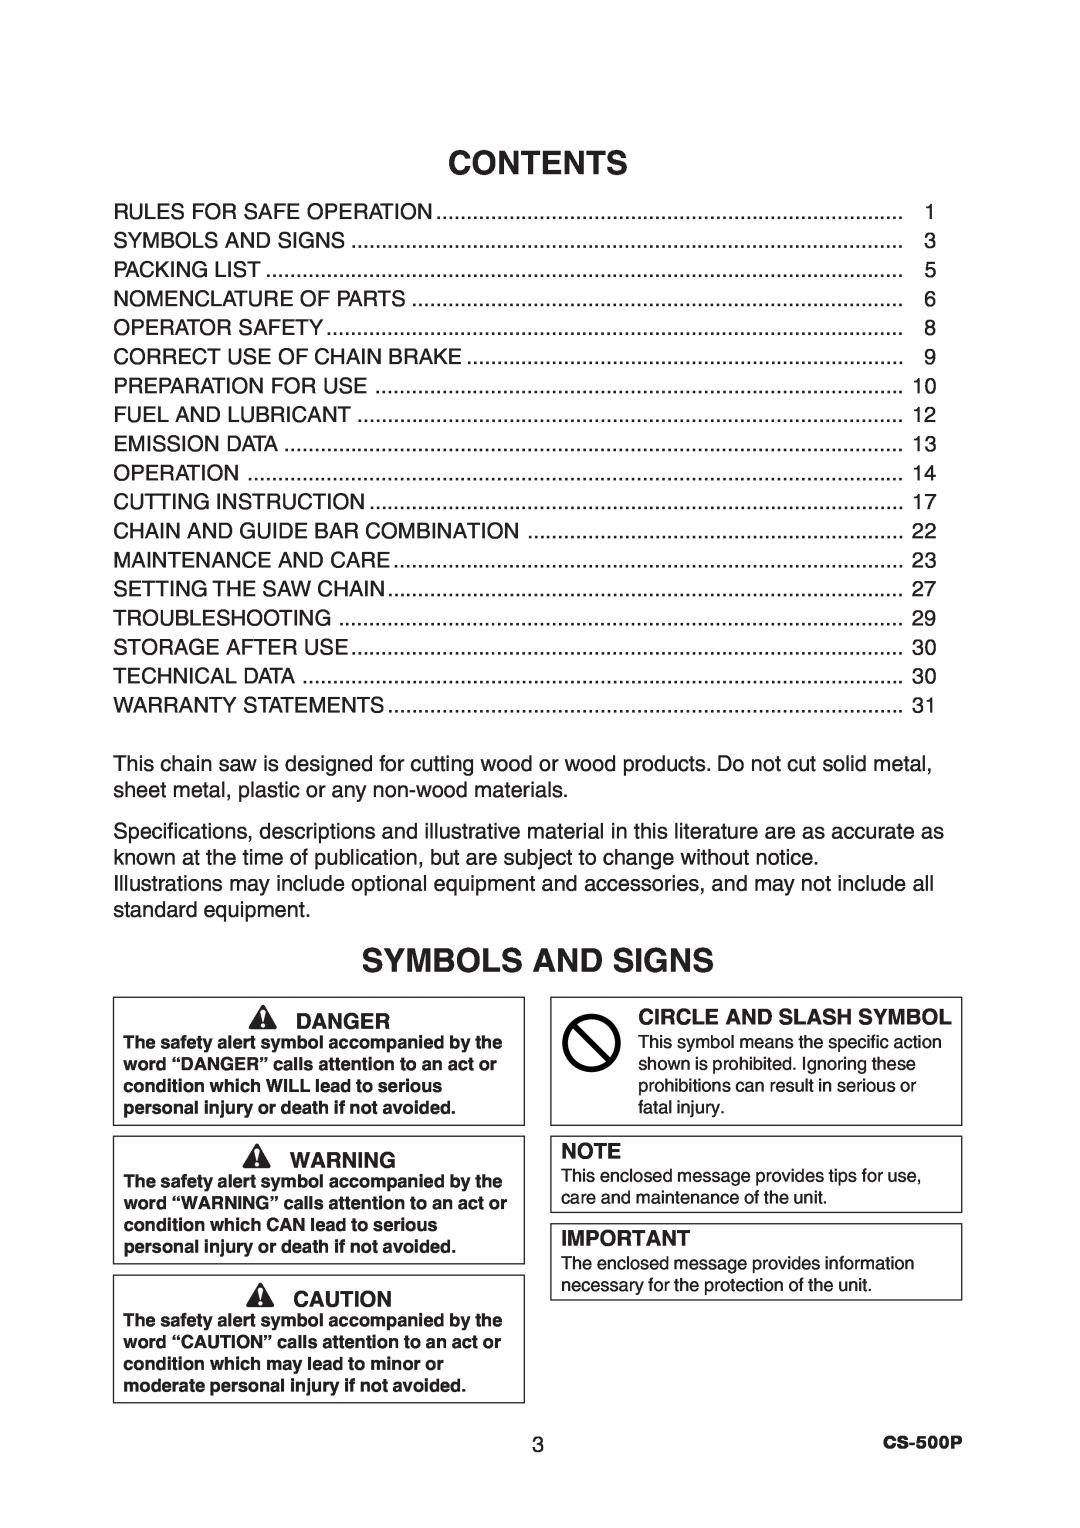 Echo CS-500P instruction manual Contents, Symbols And Signs, Danger, Circle And Slash Symbol 